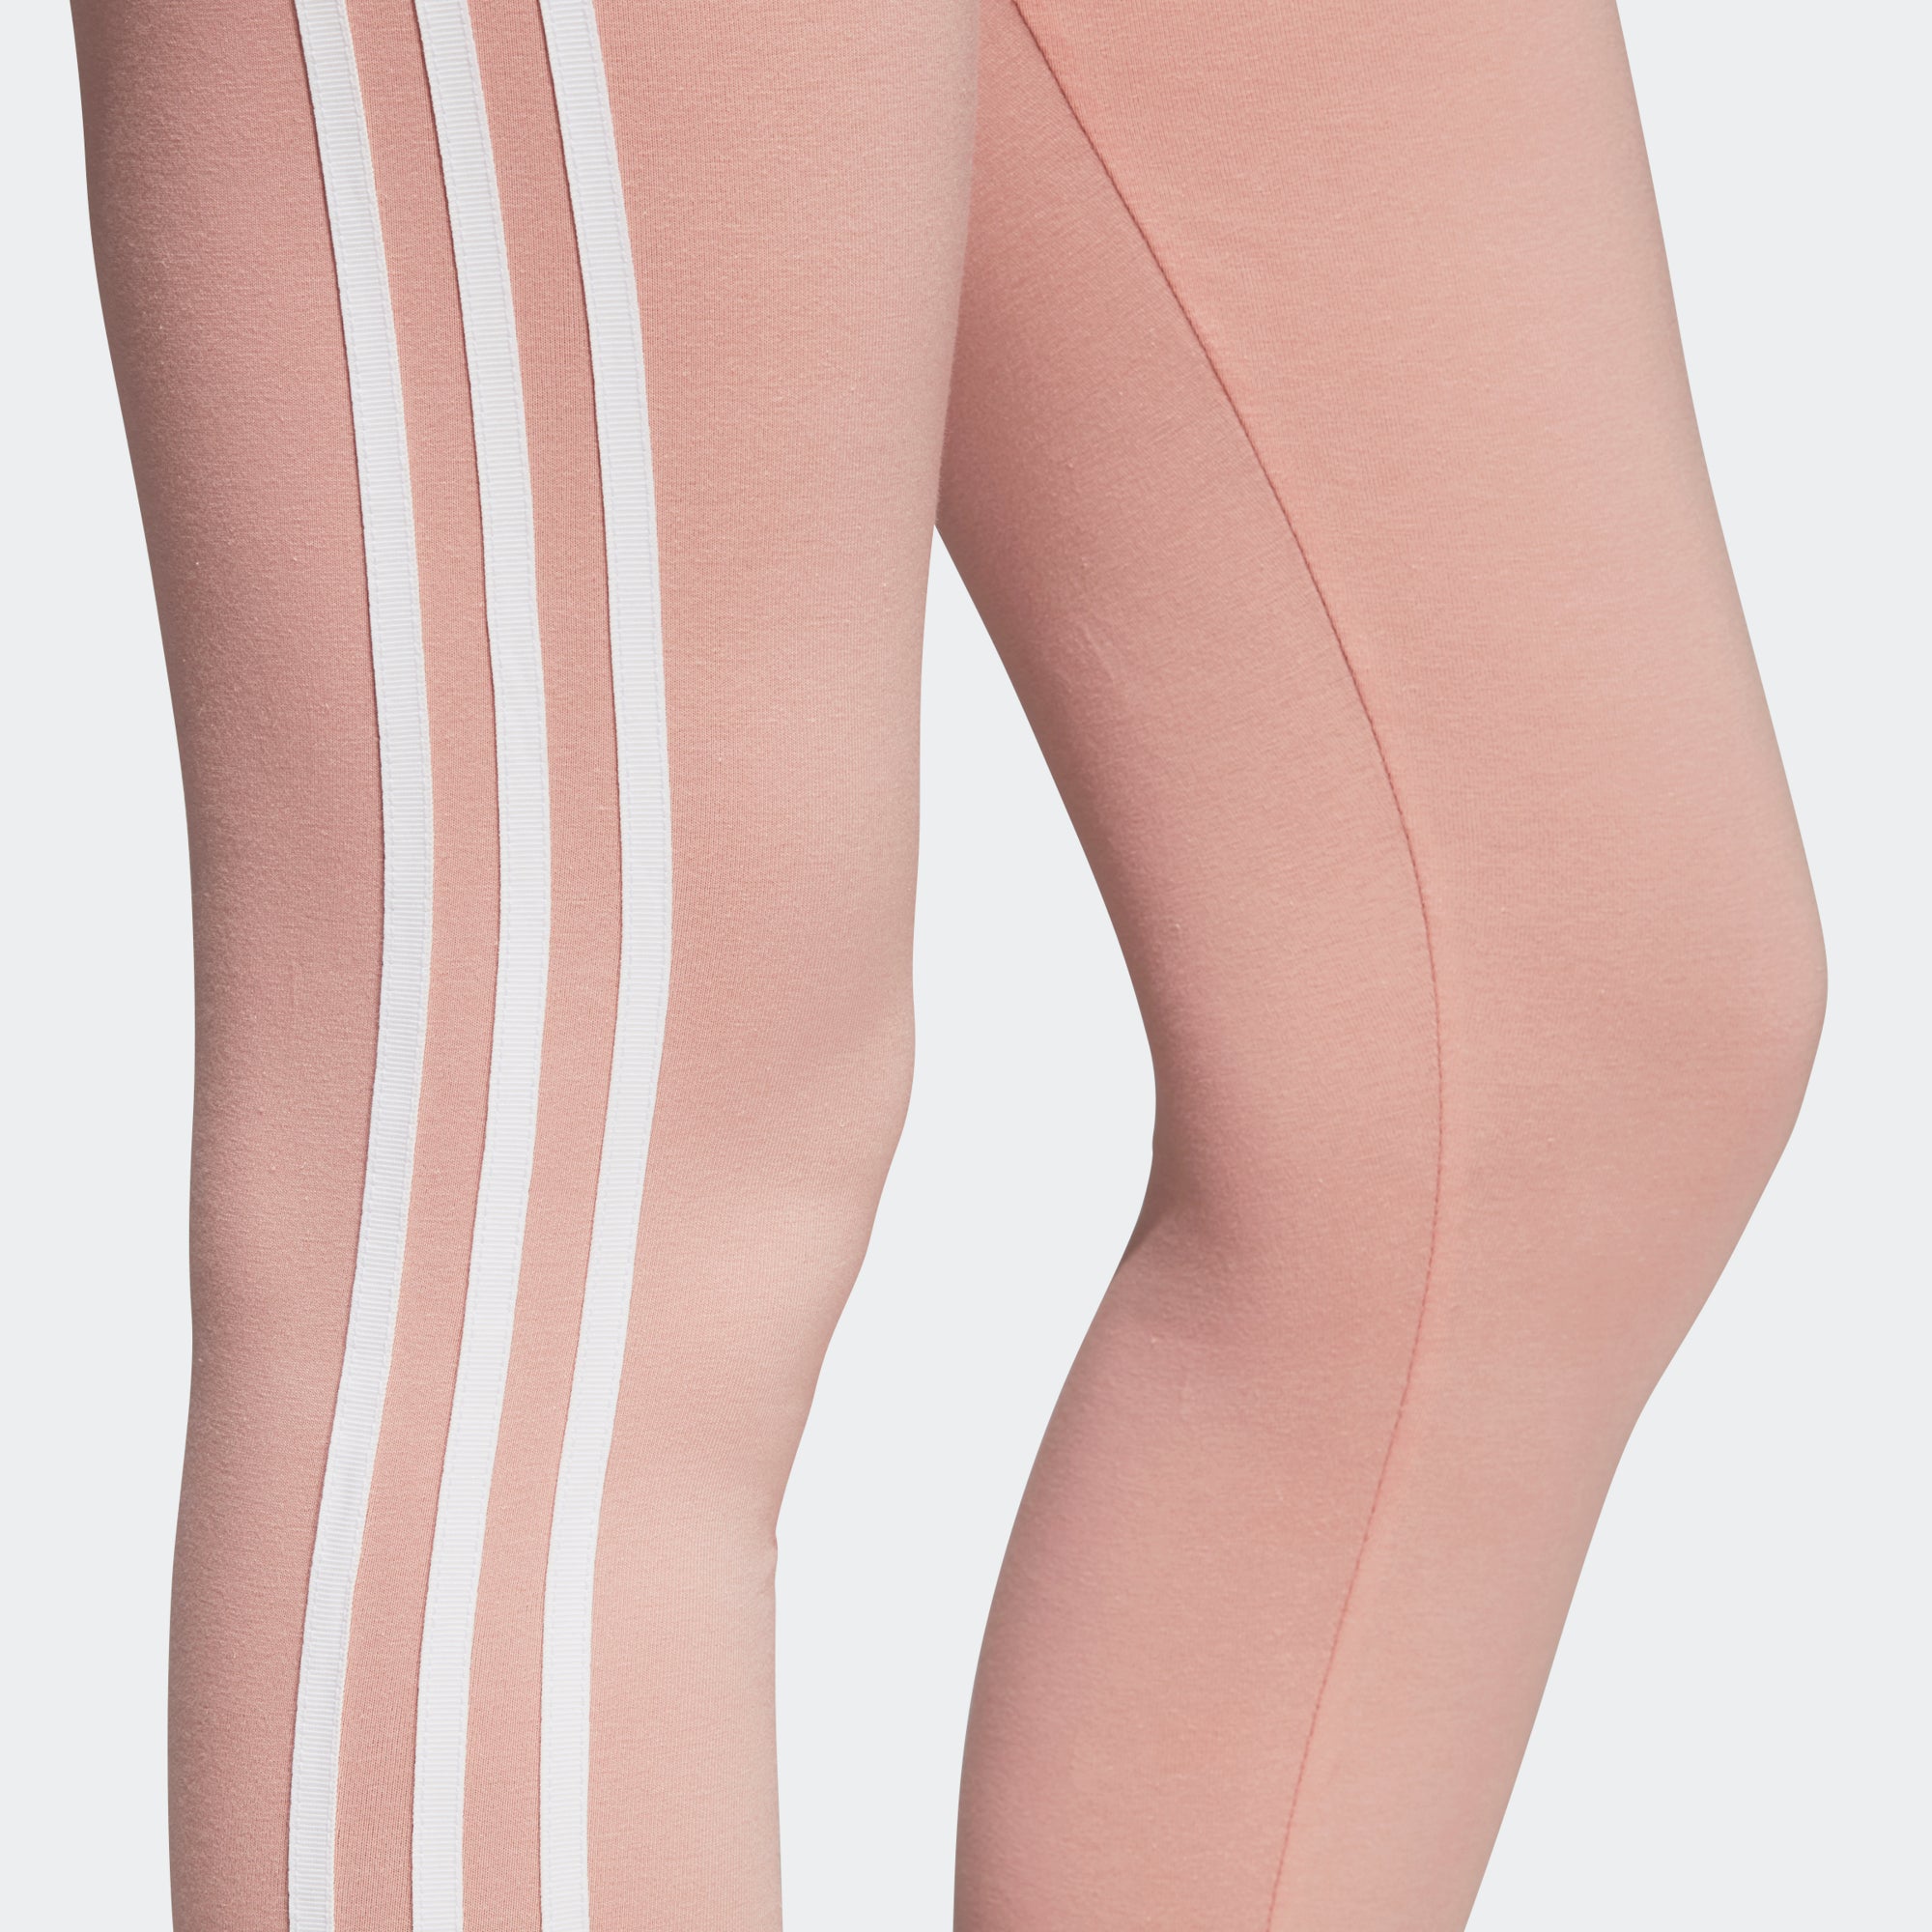 adidas dust pink leggings